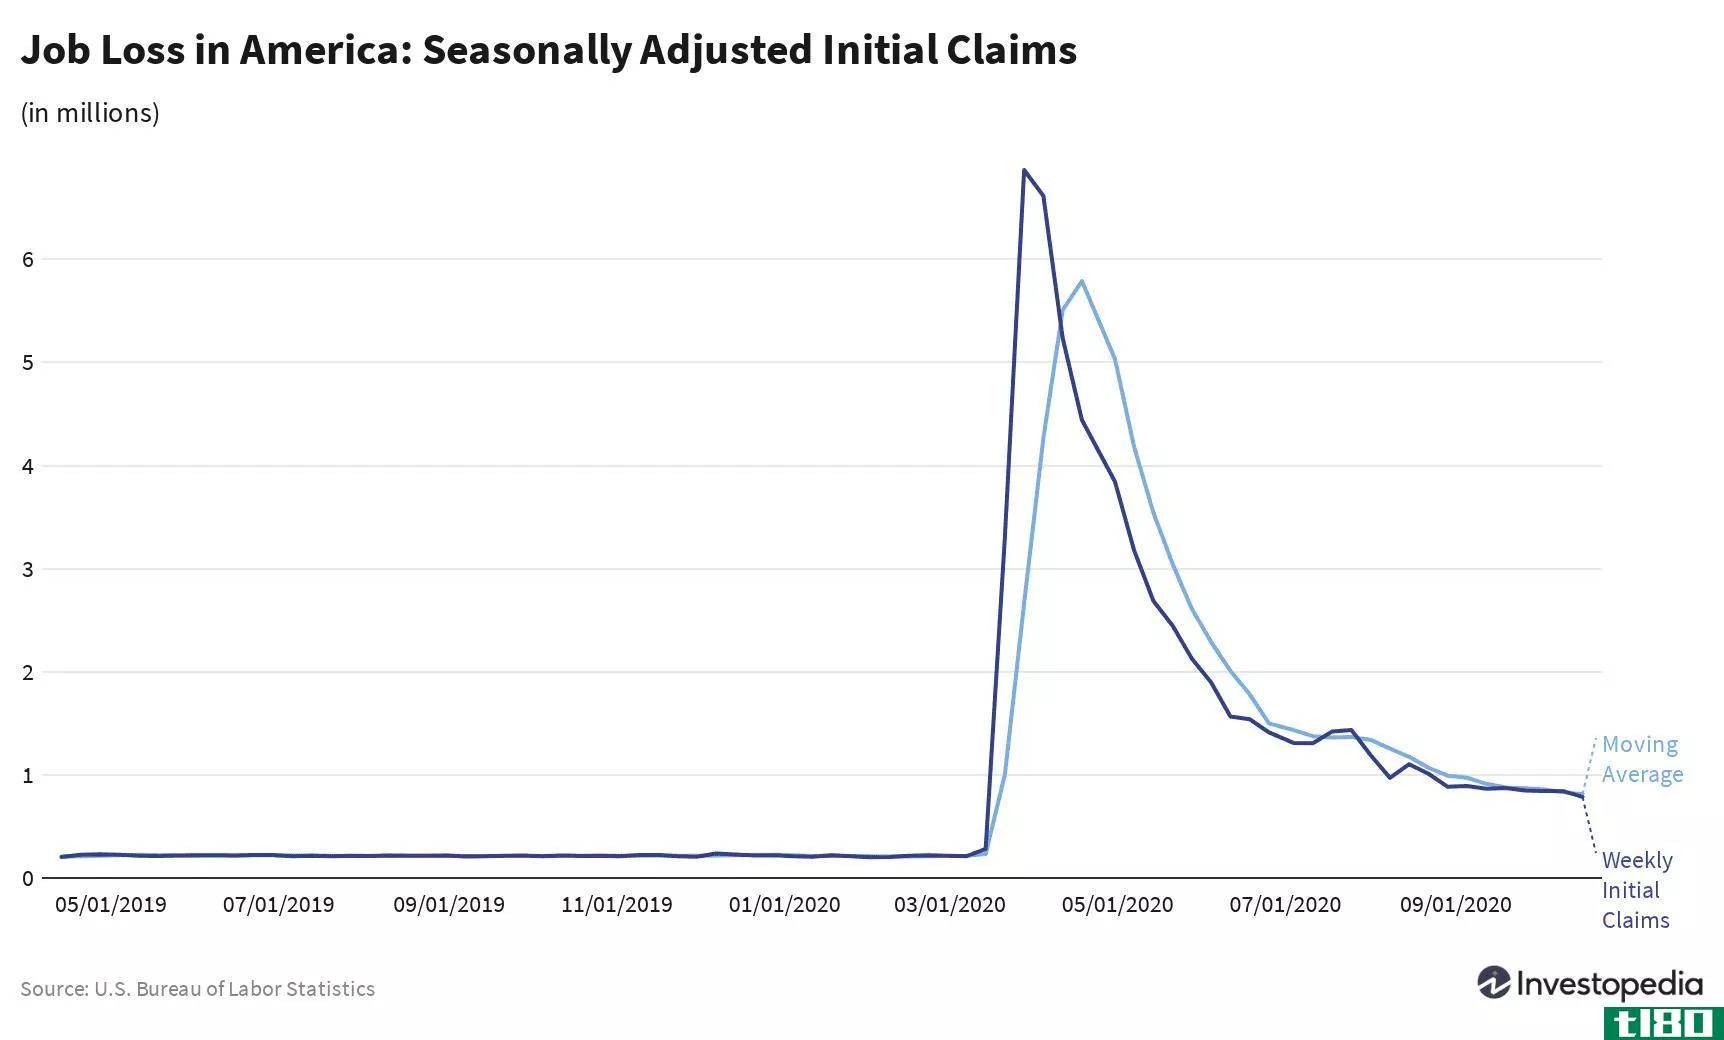 Job loss in America: Seasonally adjusted initial claims